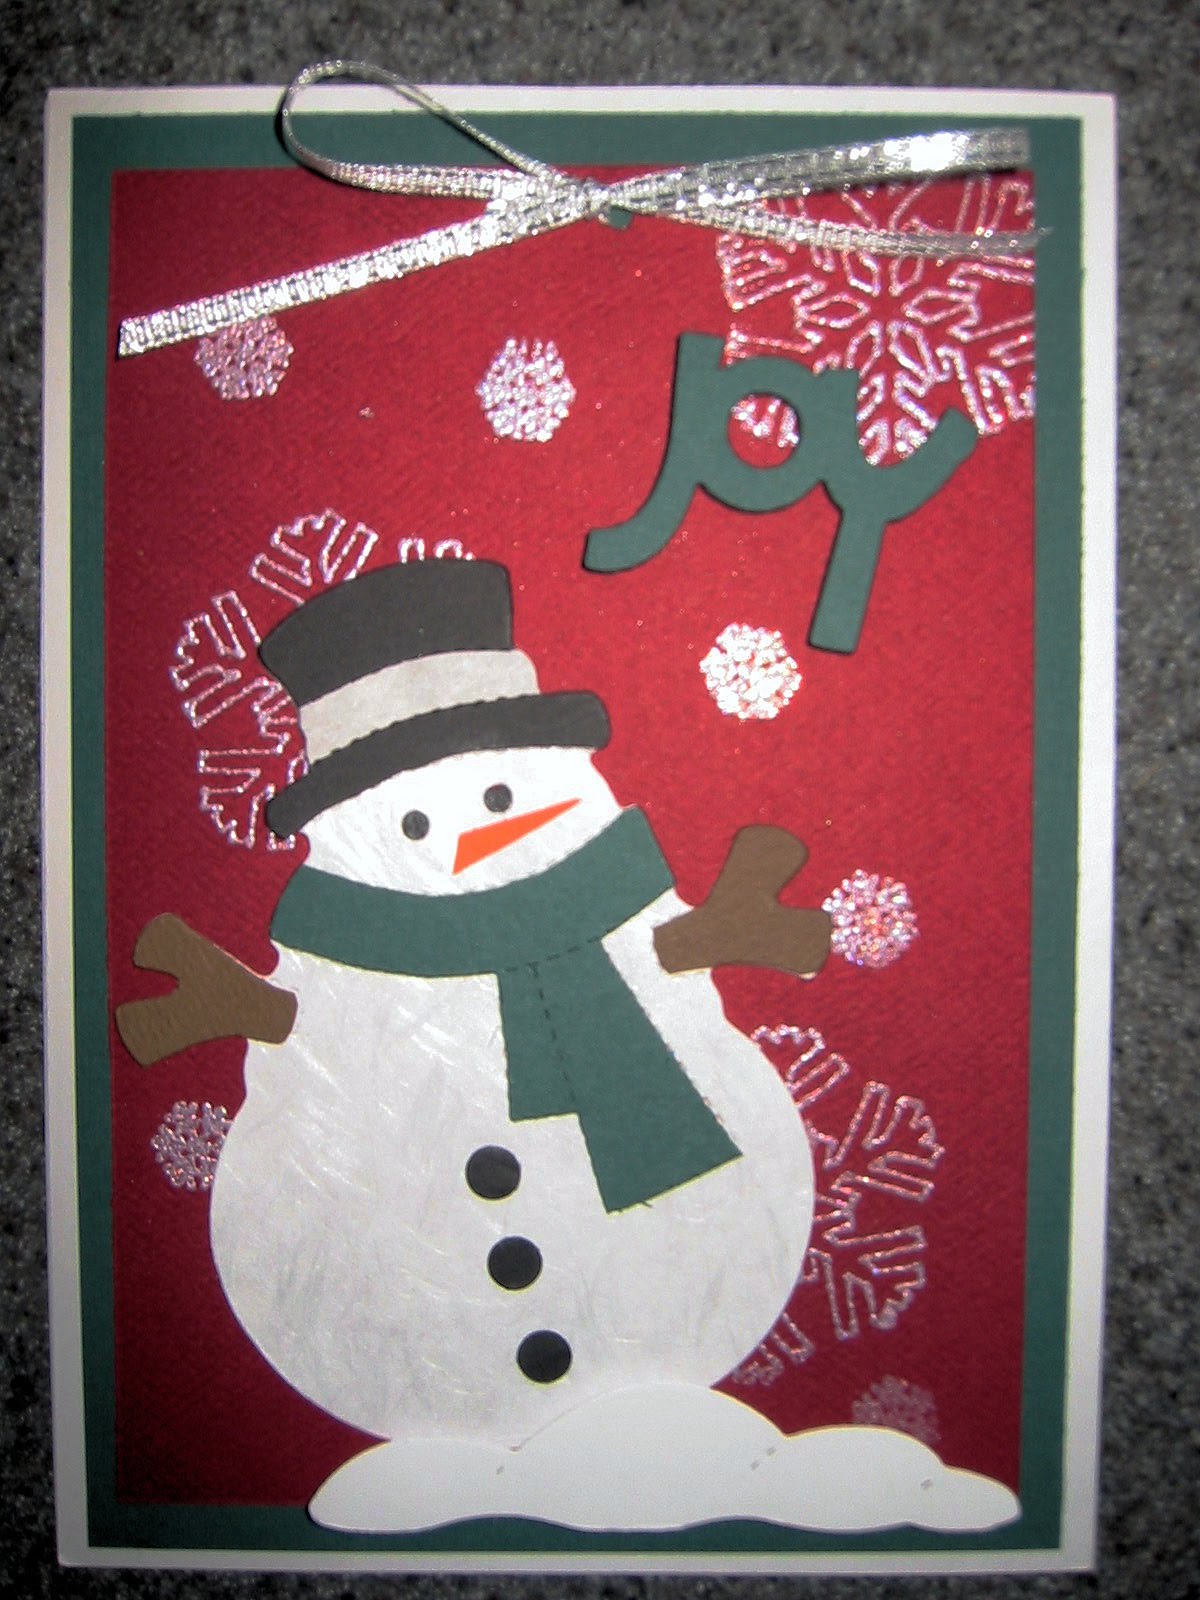 75 Best Christmas Greeting Card Design